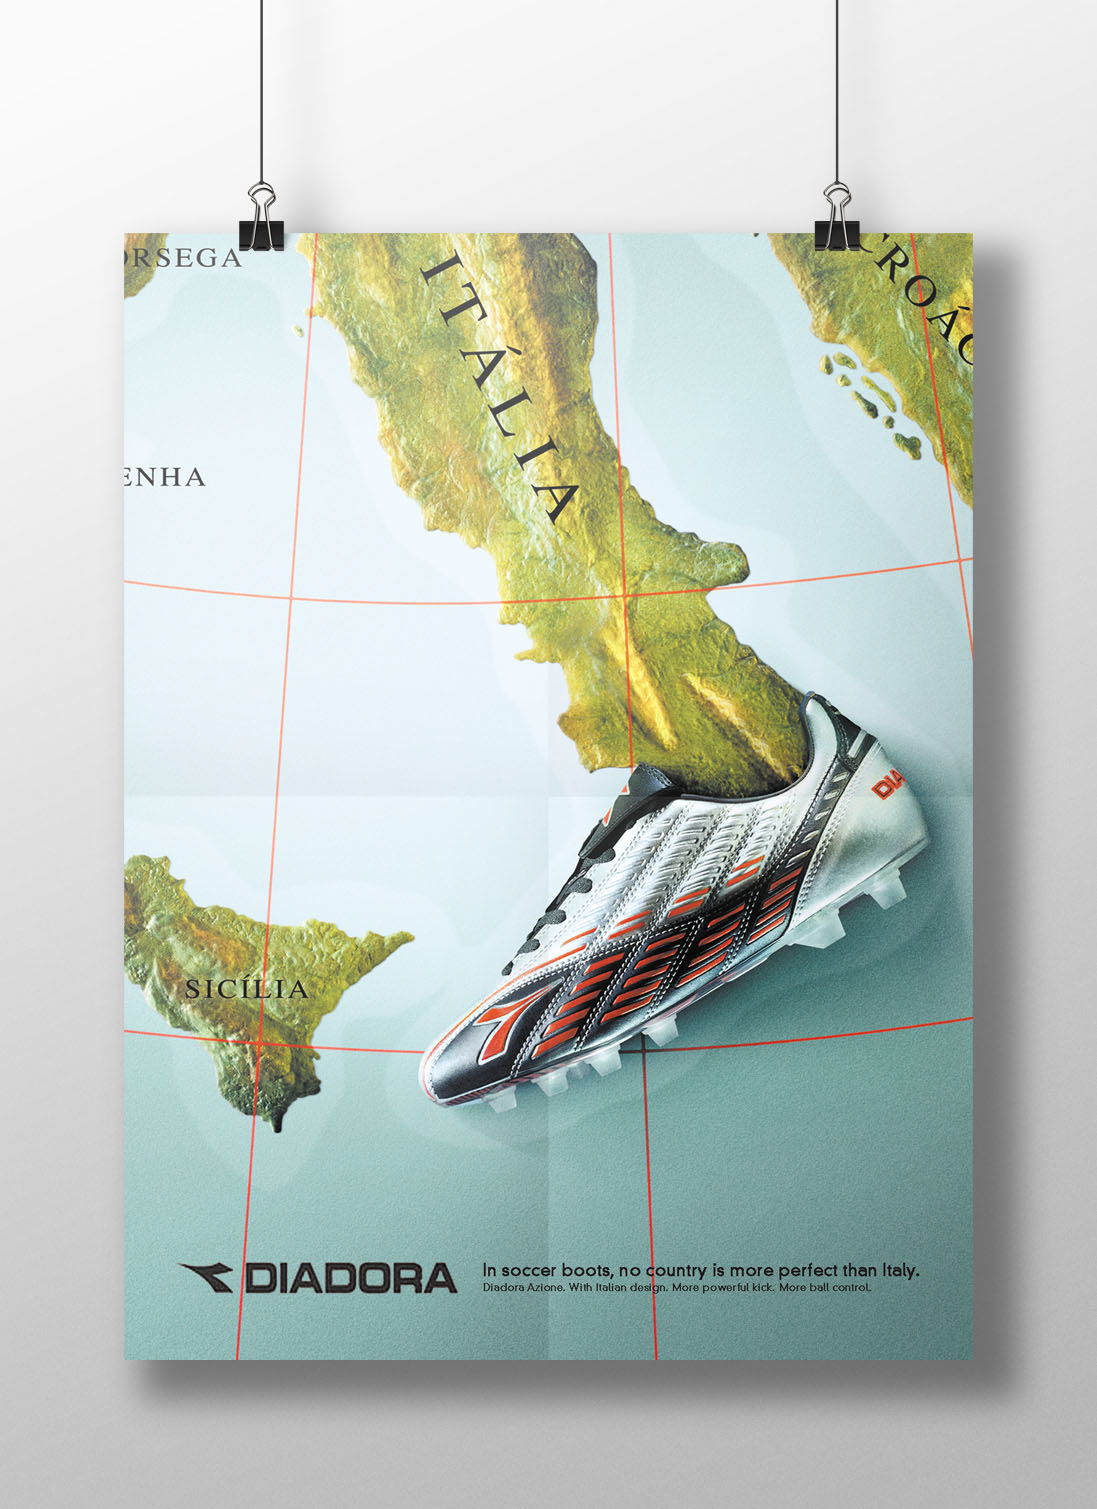 Diadora design italiano  bota  italia chuteira futebol soccer football Italy soccer boots